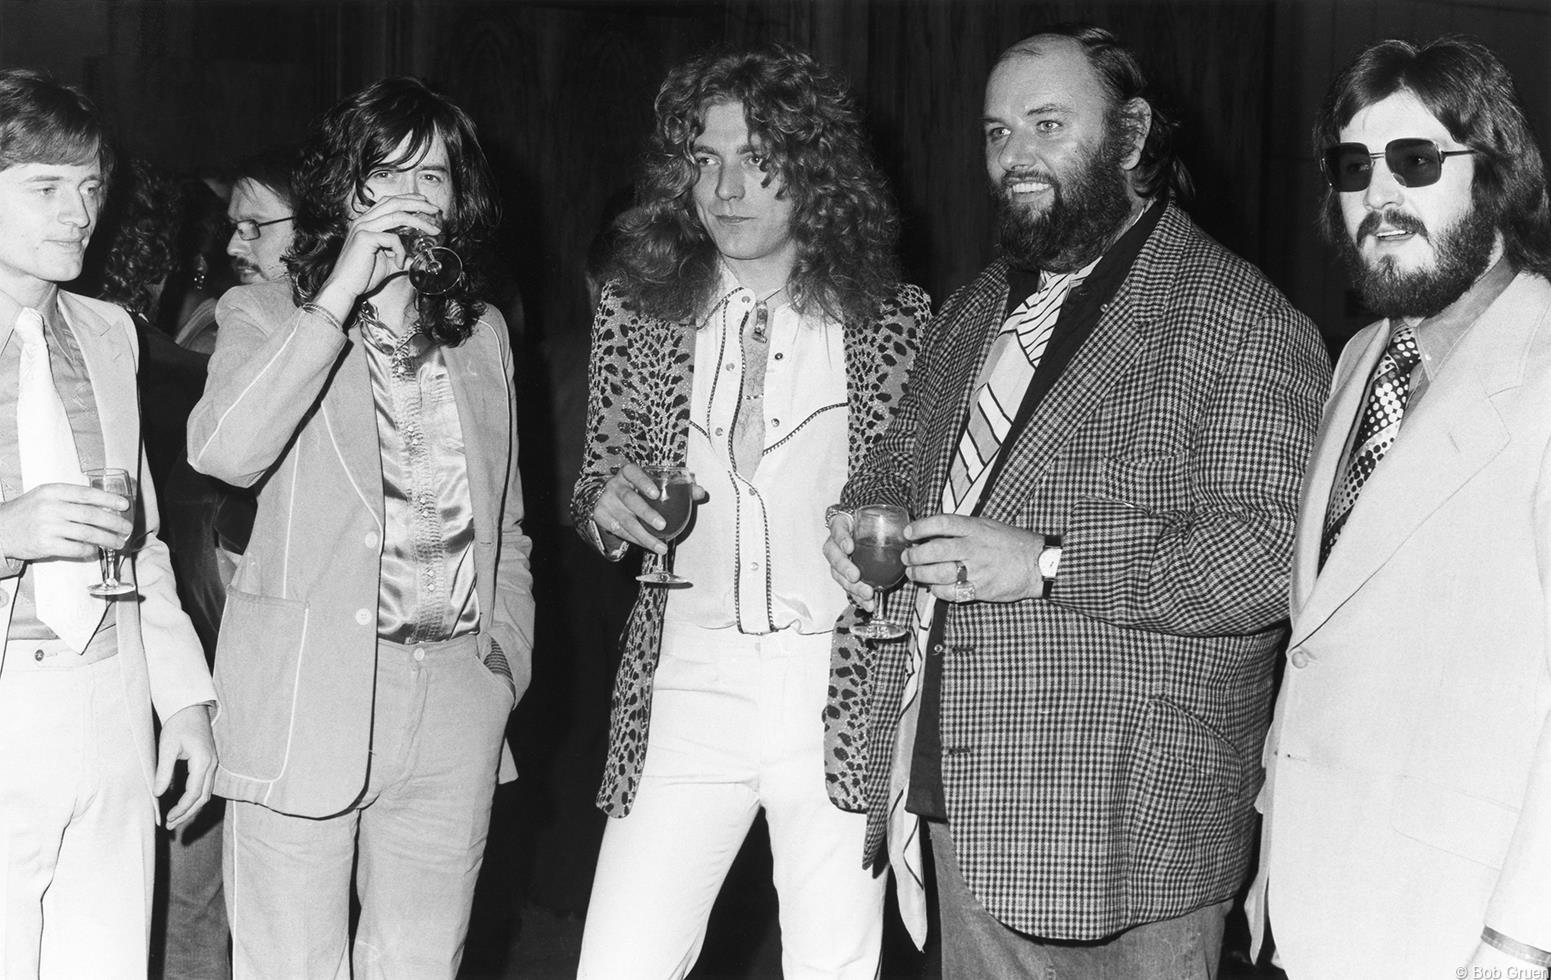 Bob Gruen Portrait Photograph - Led Zeppelin and Peter Grant, NYC, 1974